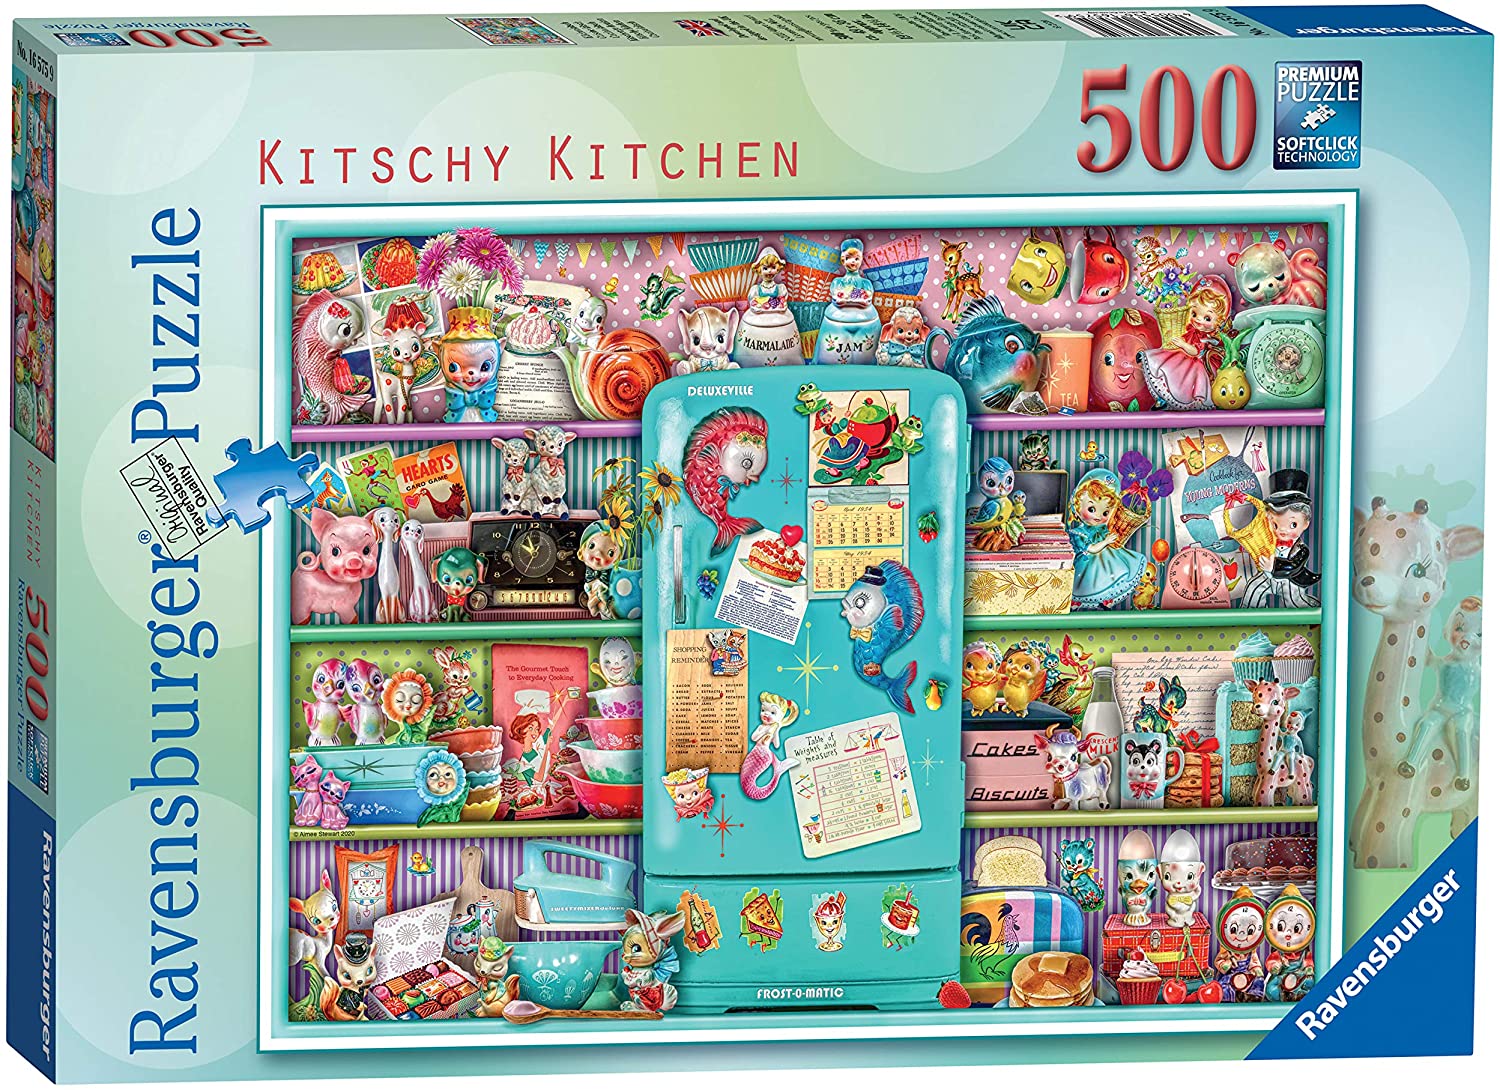 Ravensburger Kitschy Kitchen 500 Piece Jigsaw